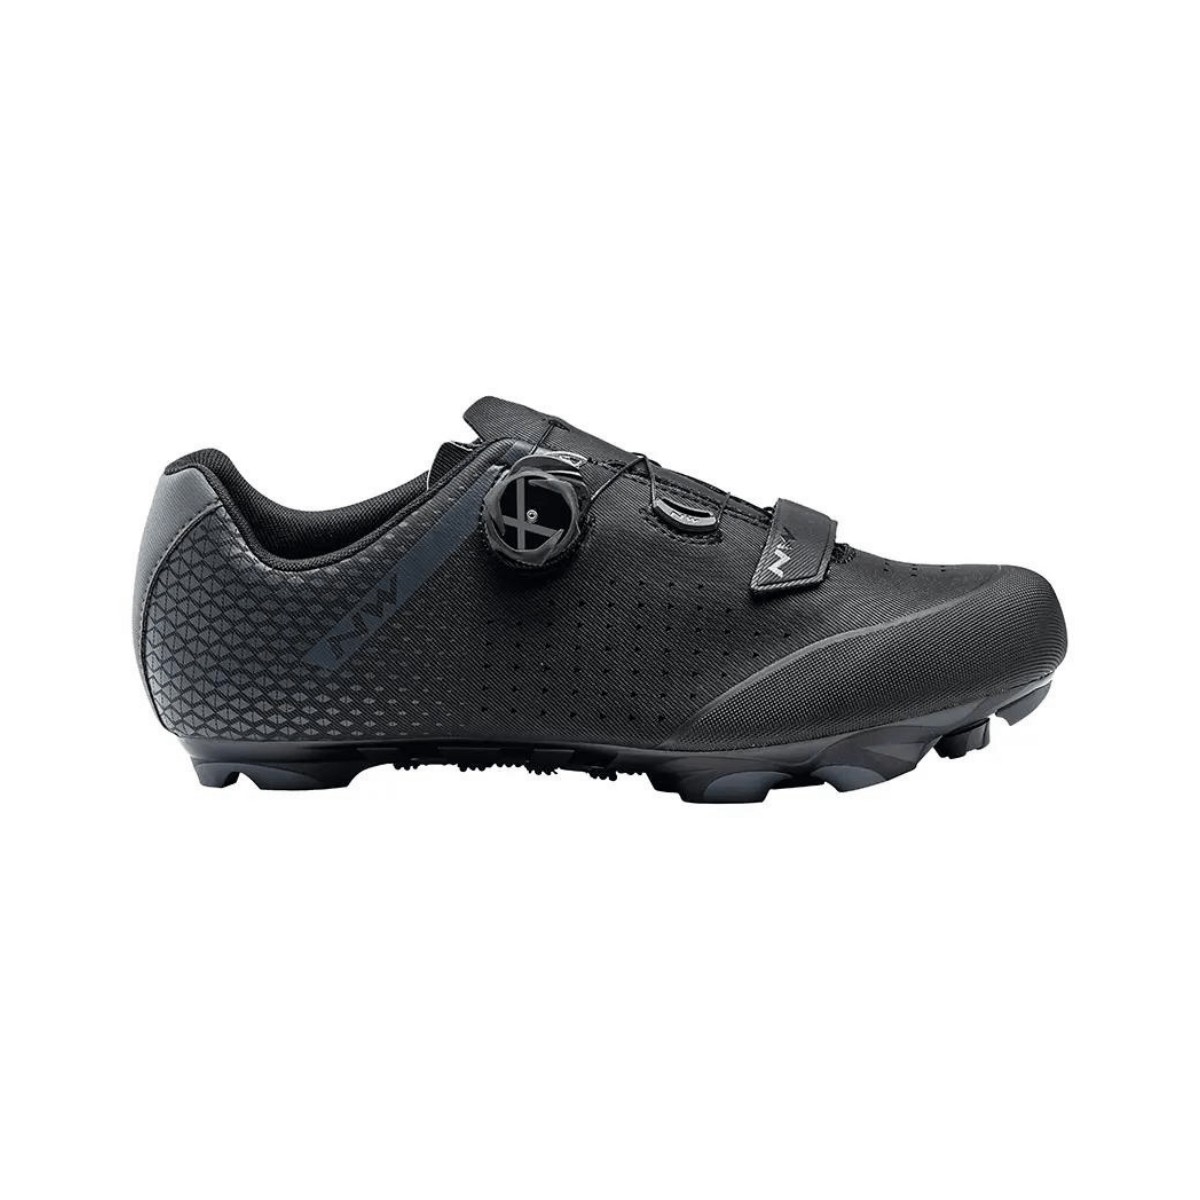 Northwave Origin Plus 2 MTB Shoes Black Anthracite, Size 41 - EUR